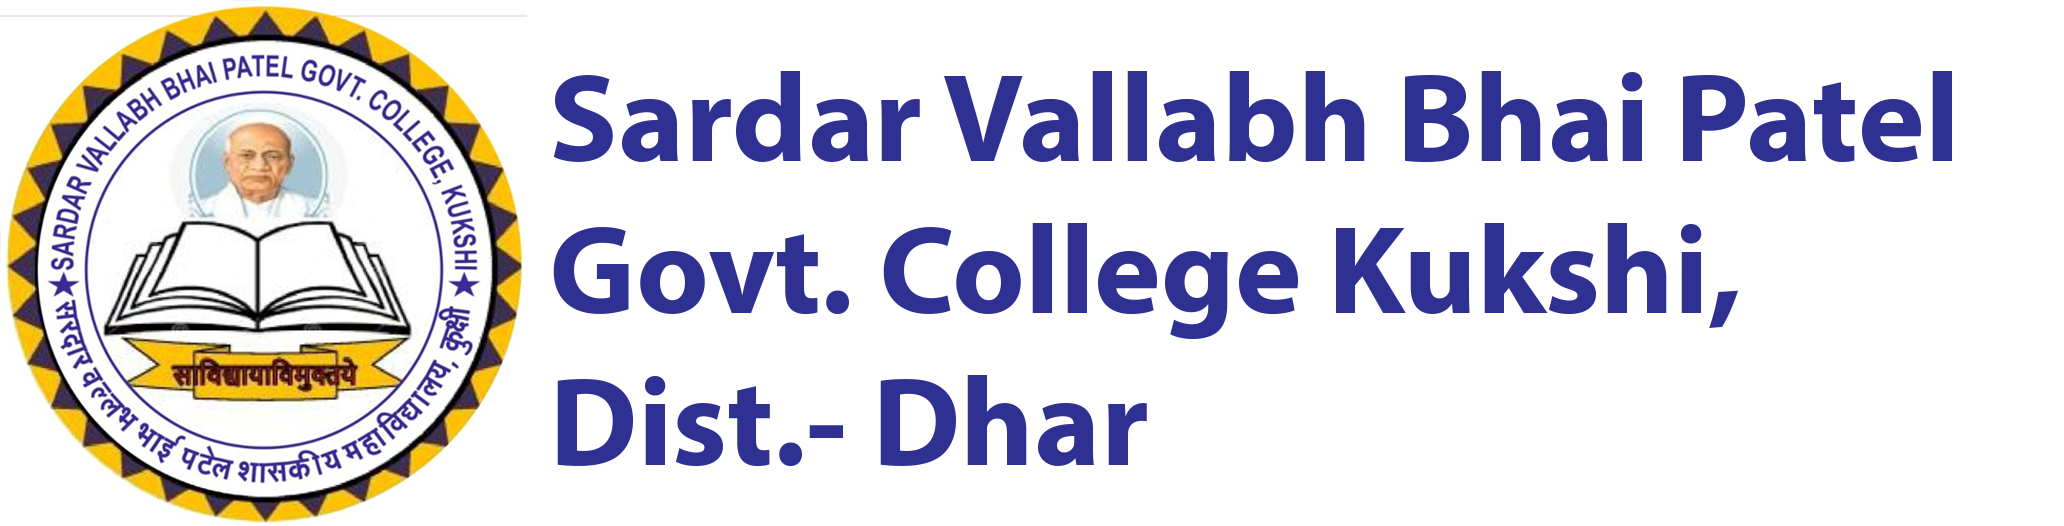 Sardar Vallabh Bhai Patel Govt. College, Kukshi